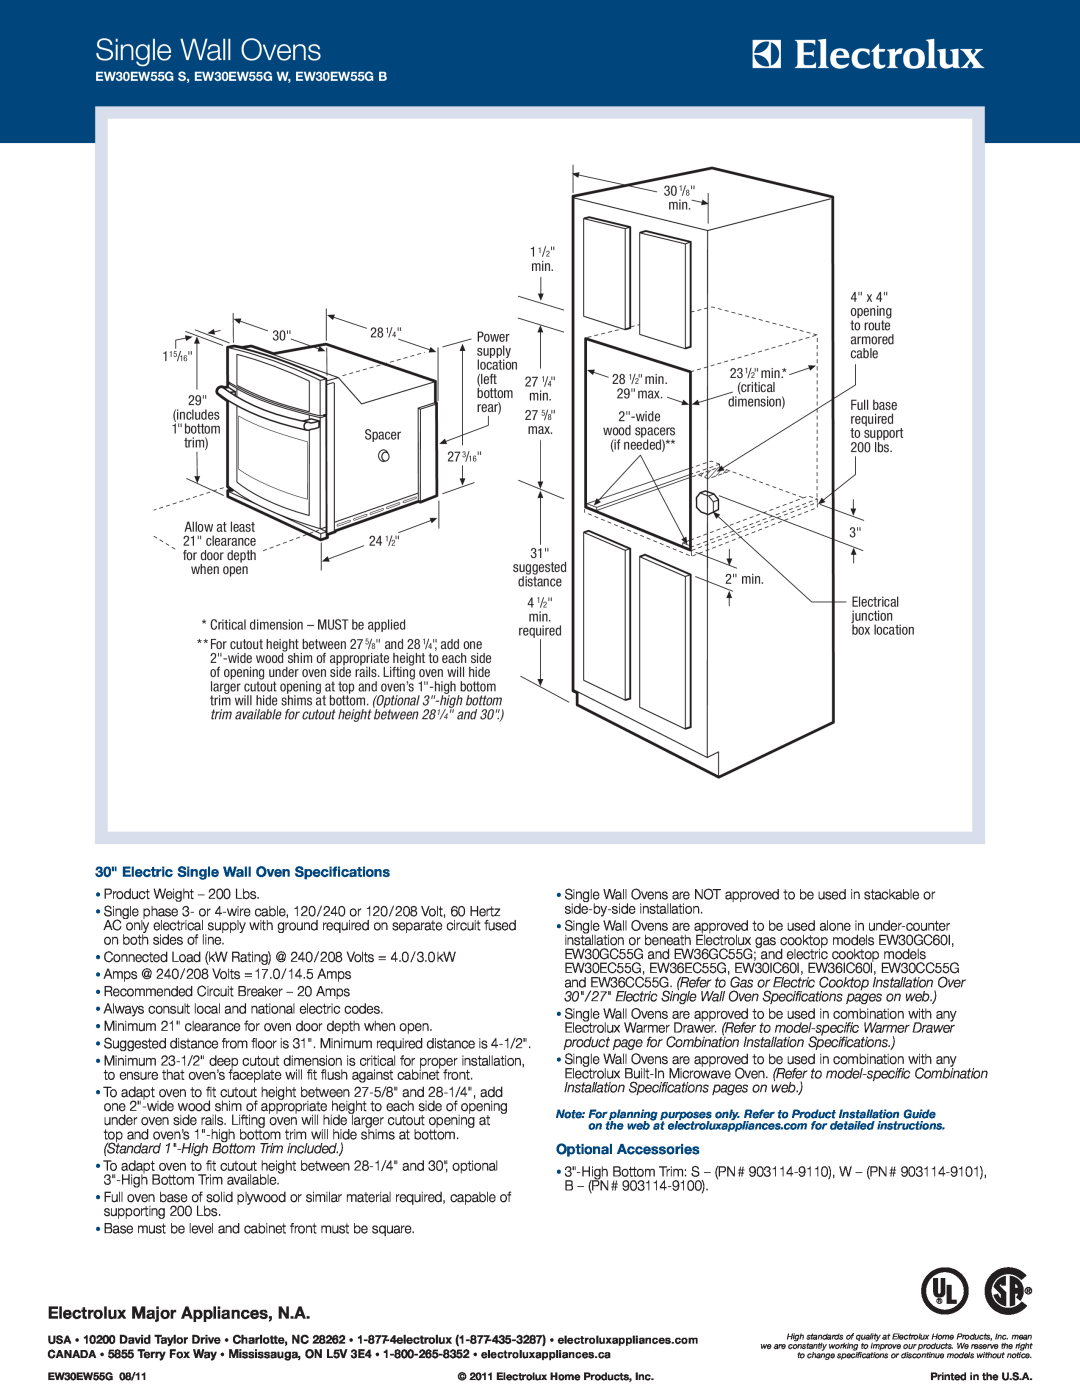 Electrolux EW30EW55G B, EW30EW55G S Single Wall Ovens, Electrolux Major Appliances, N.A, 28 /4 and, Optional Accessories 